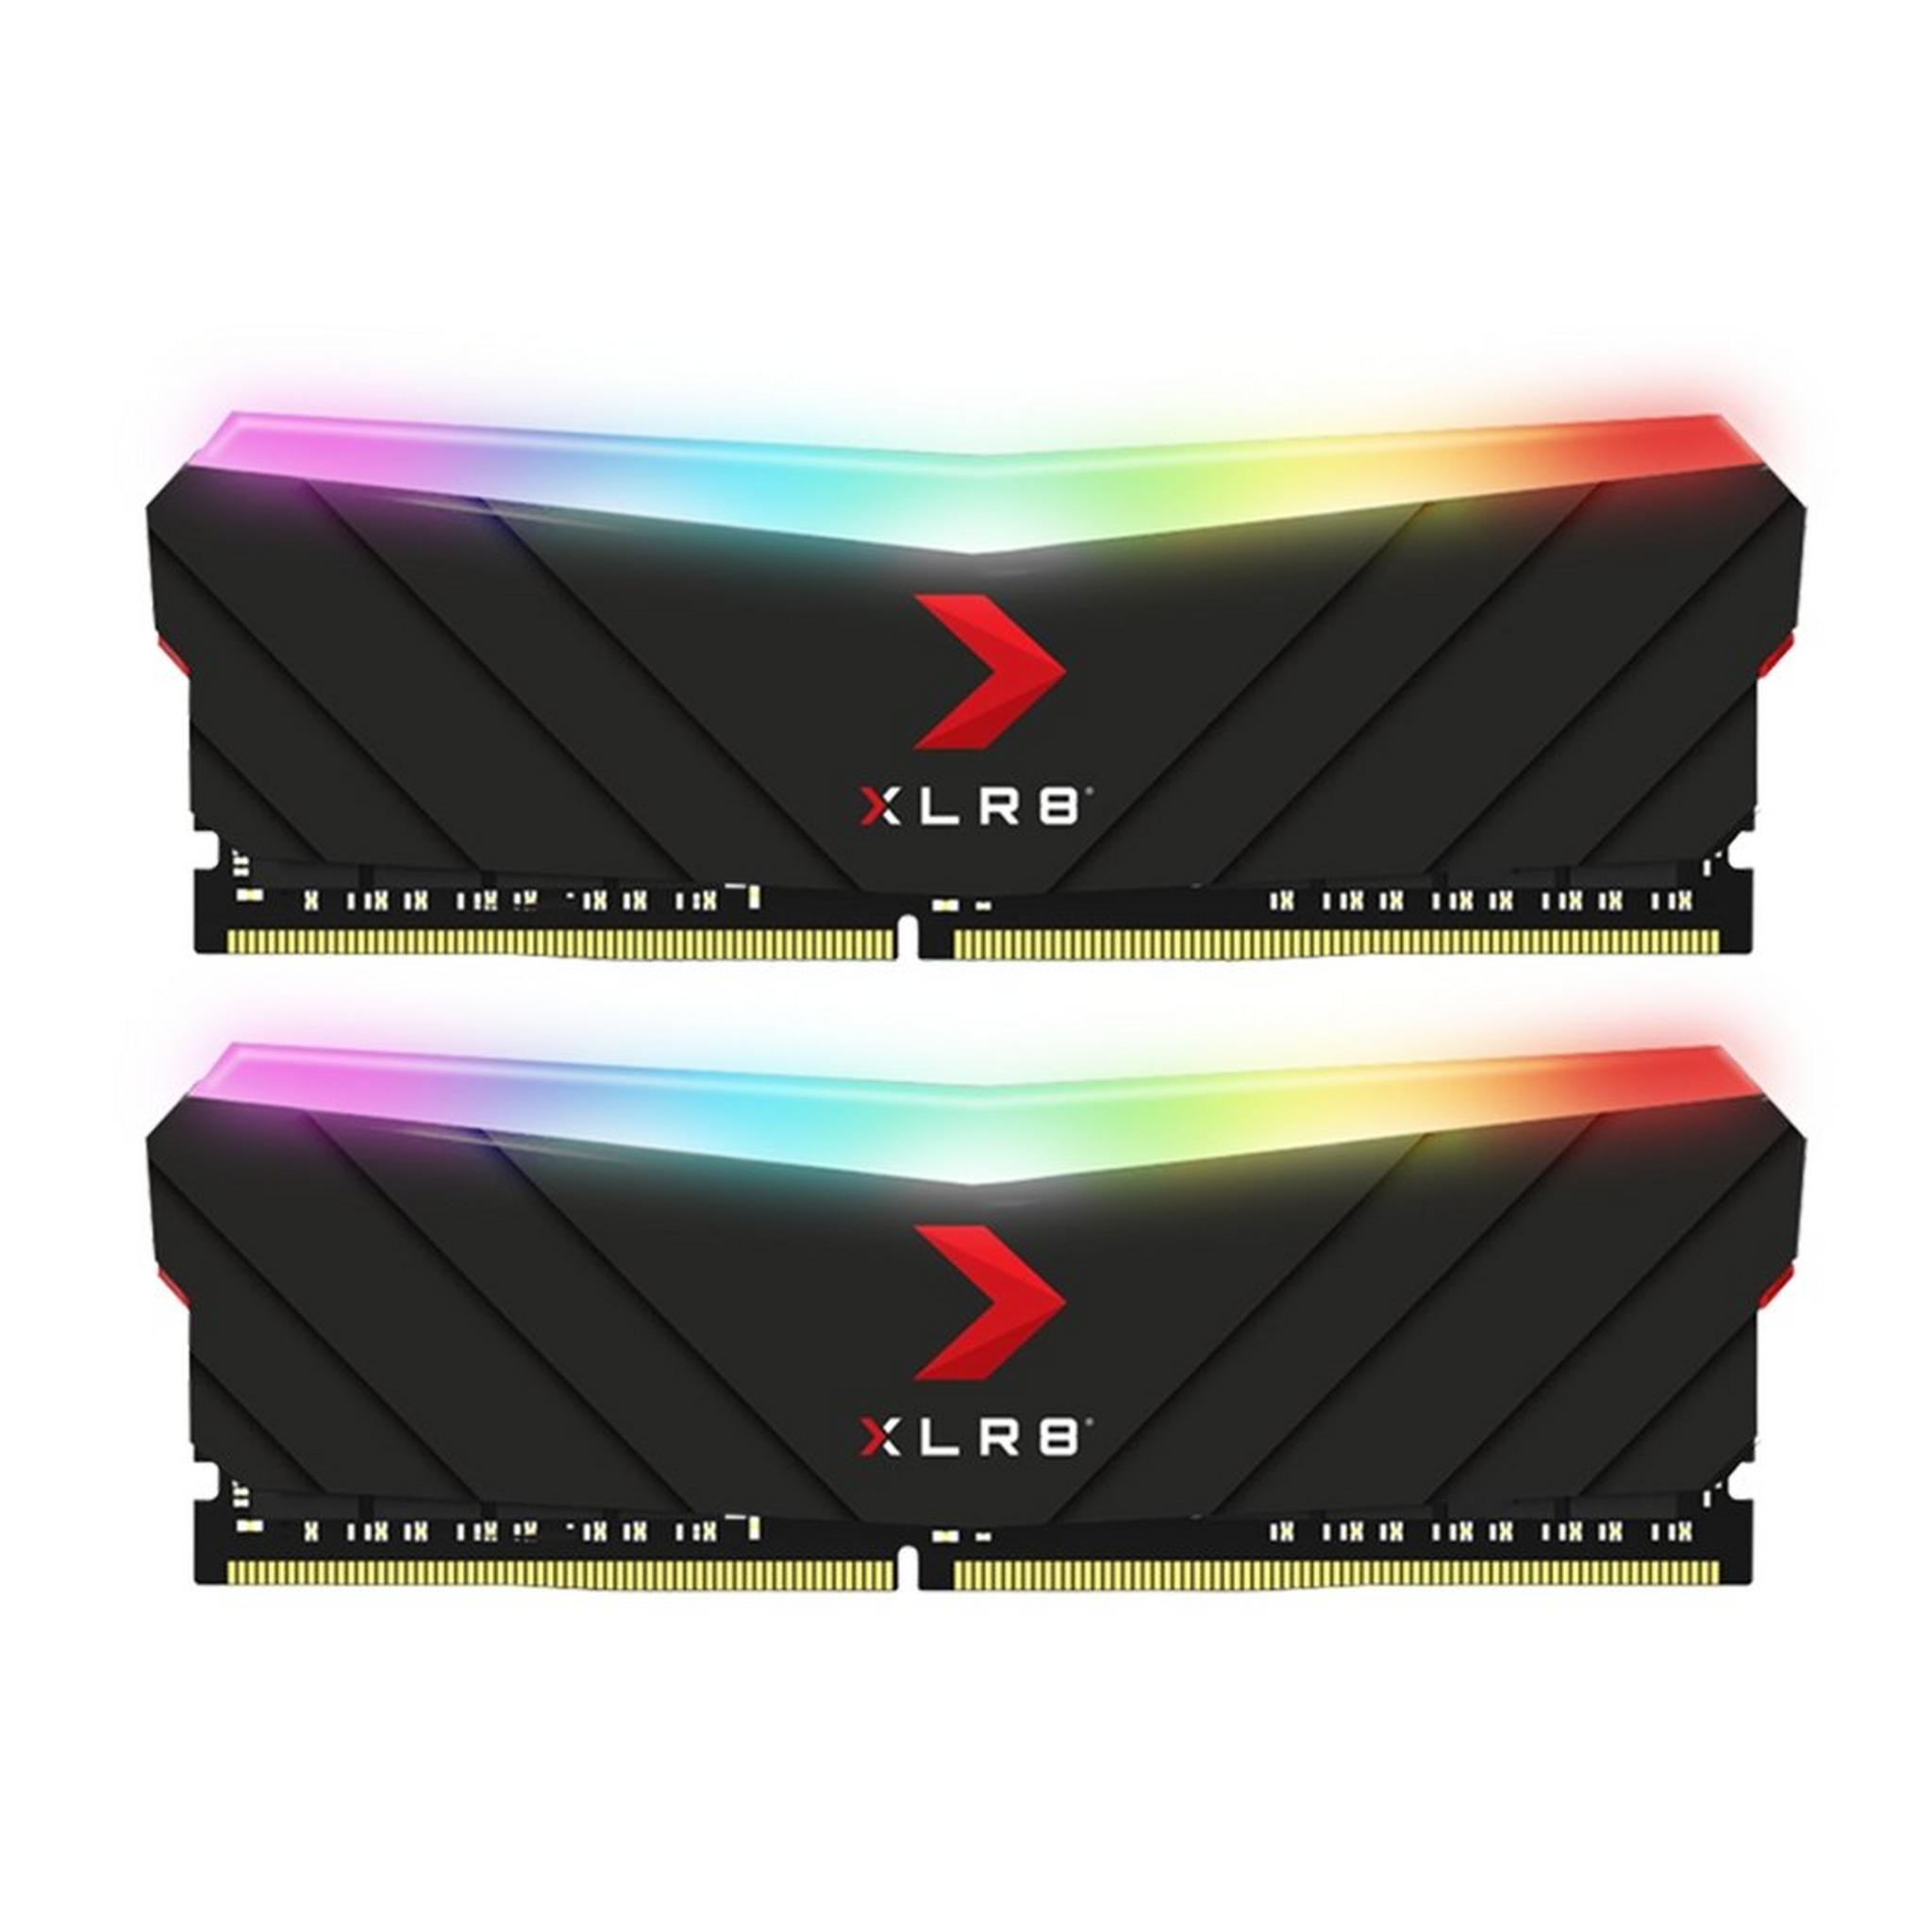 PNY XLR8 Epic X RGB-DDR4 3200mHz 2*8GB Gaming Desktop Memory - Black